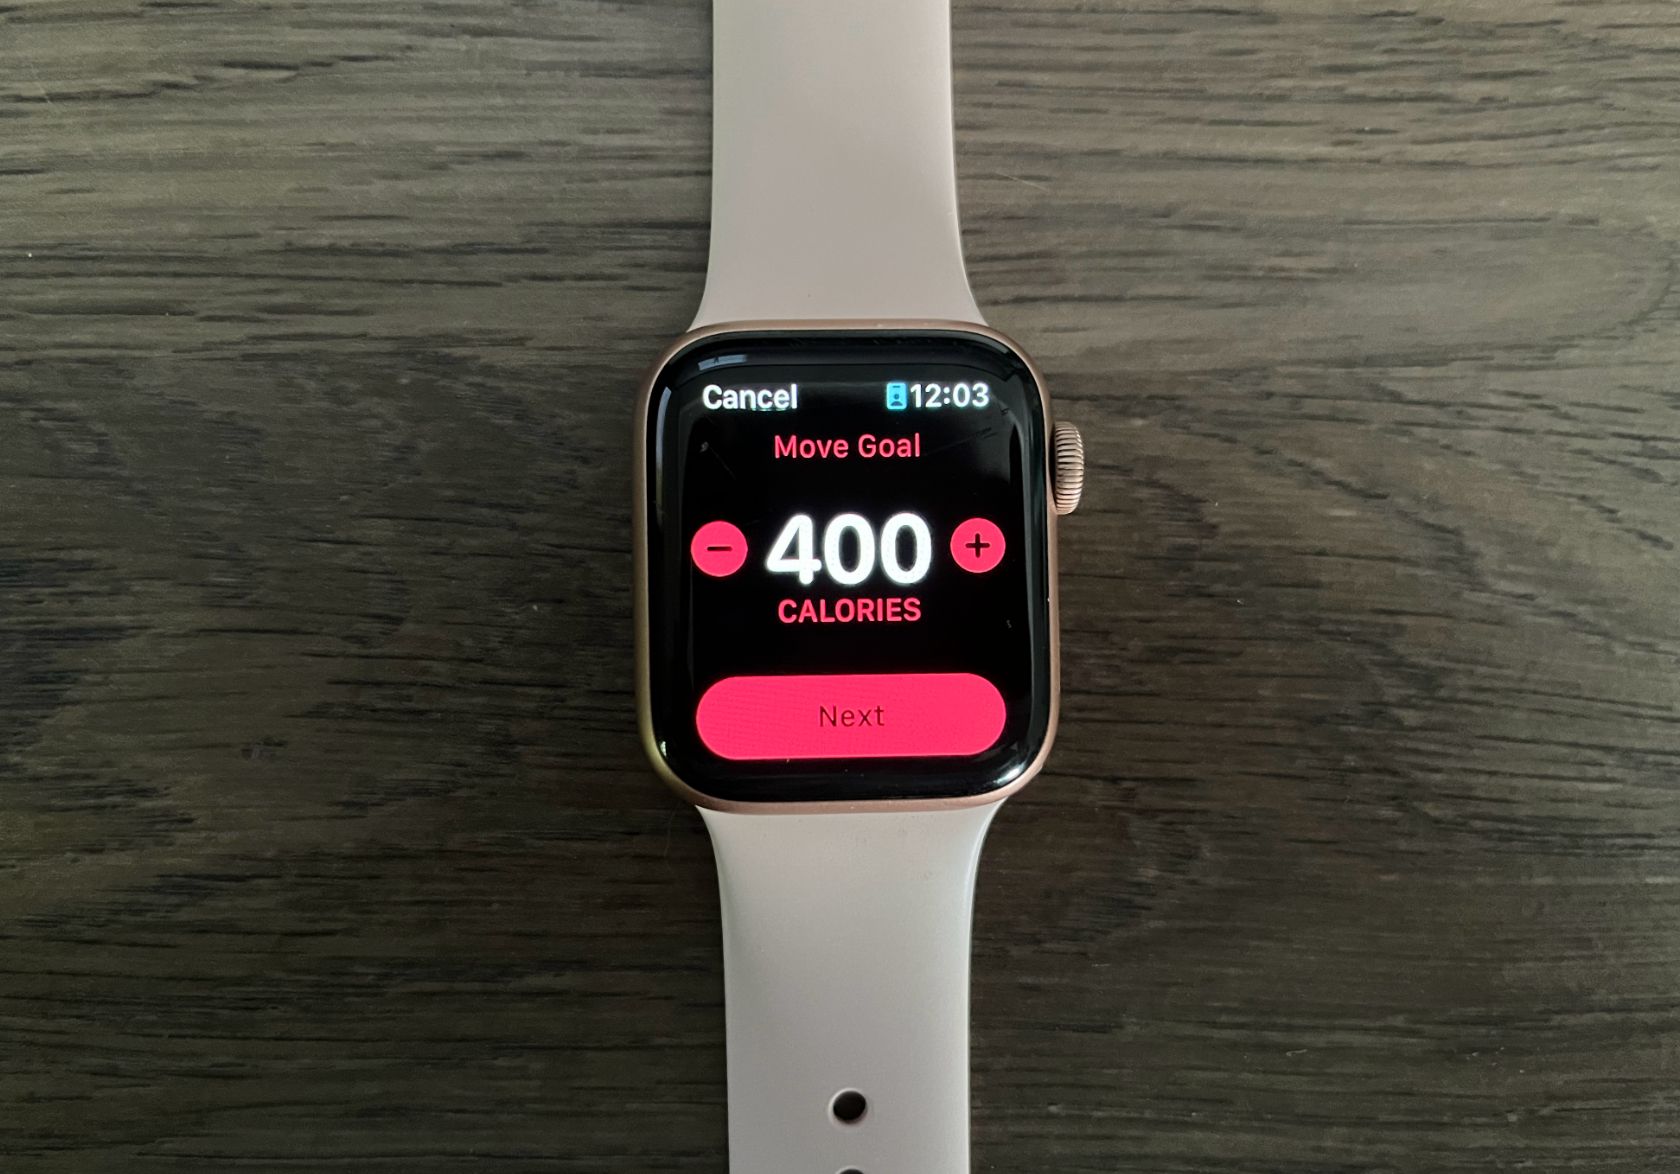 A watch displaying a movement goal adjustment menu